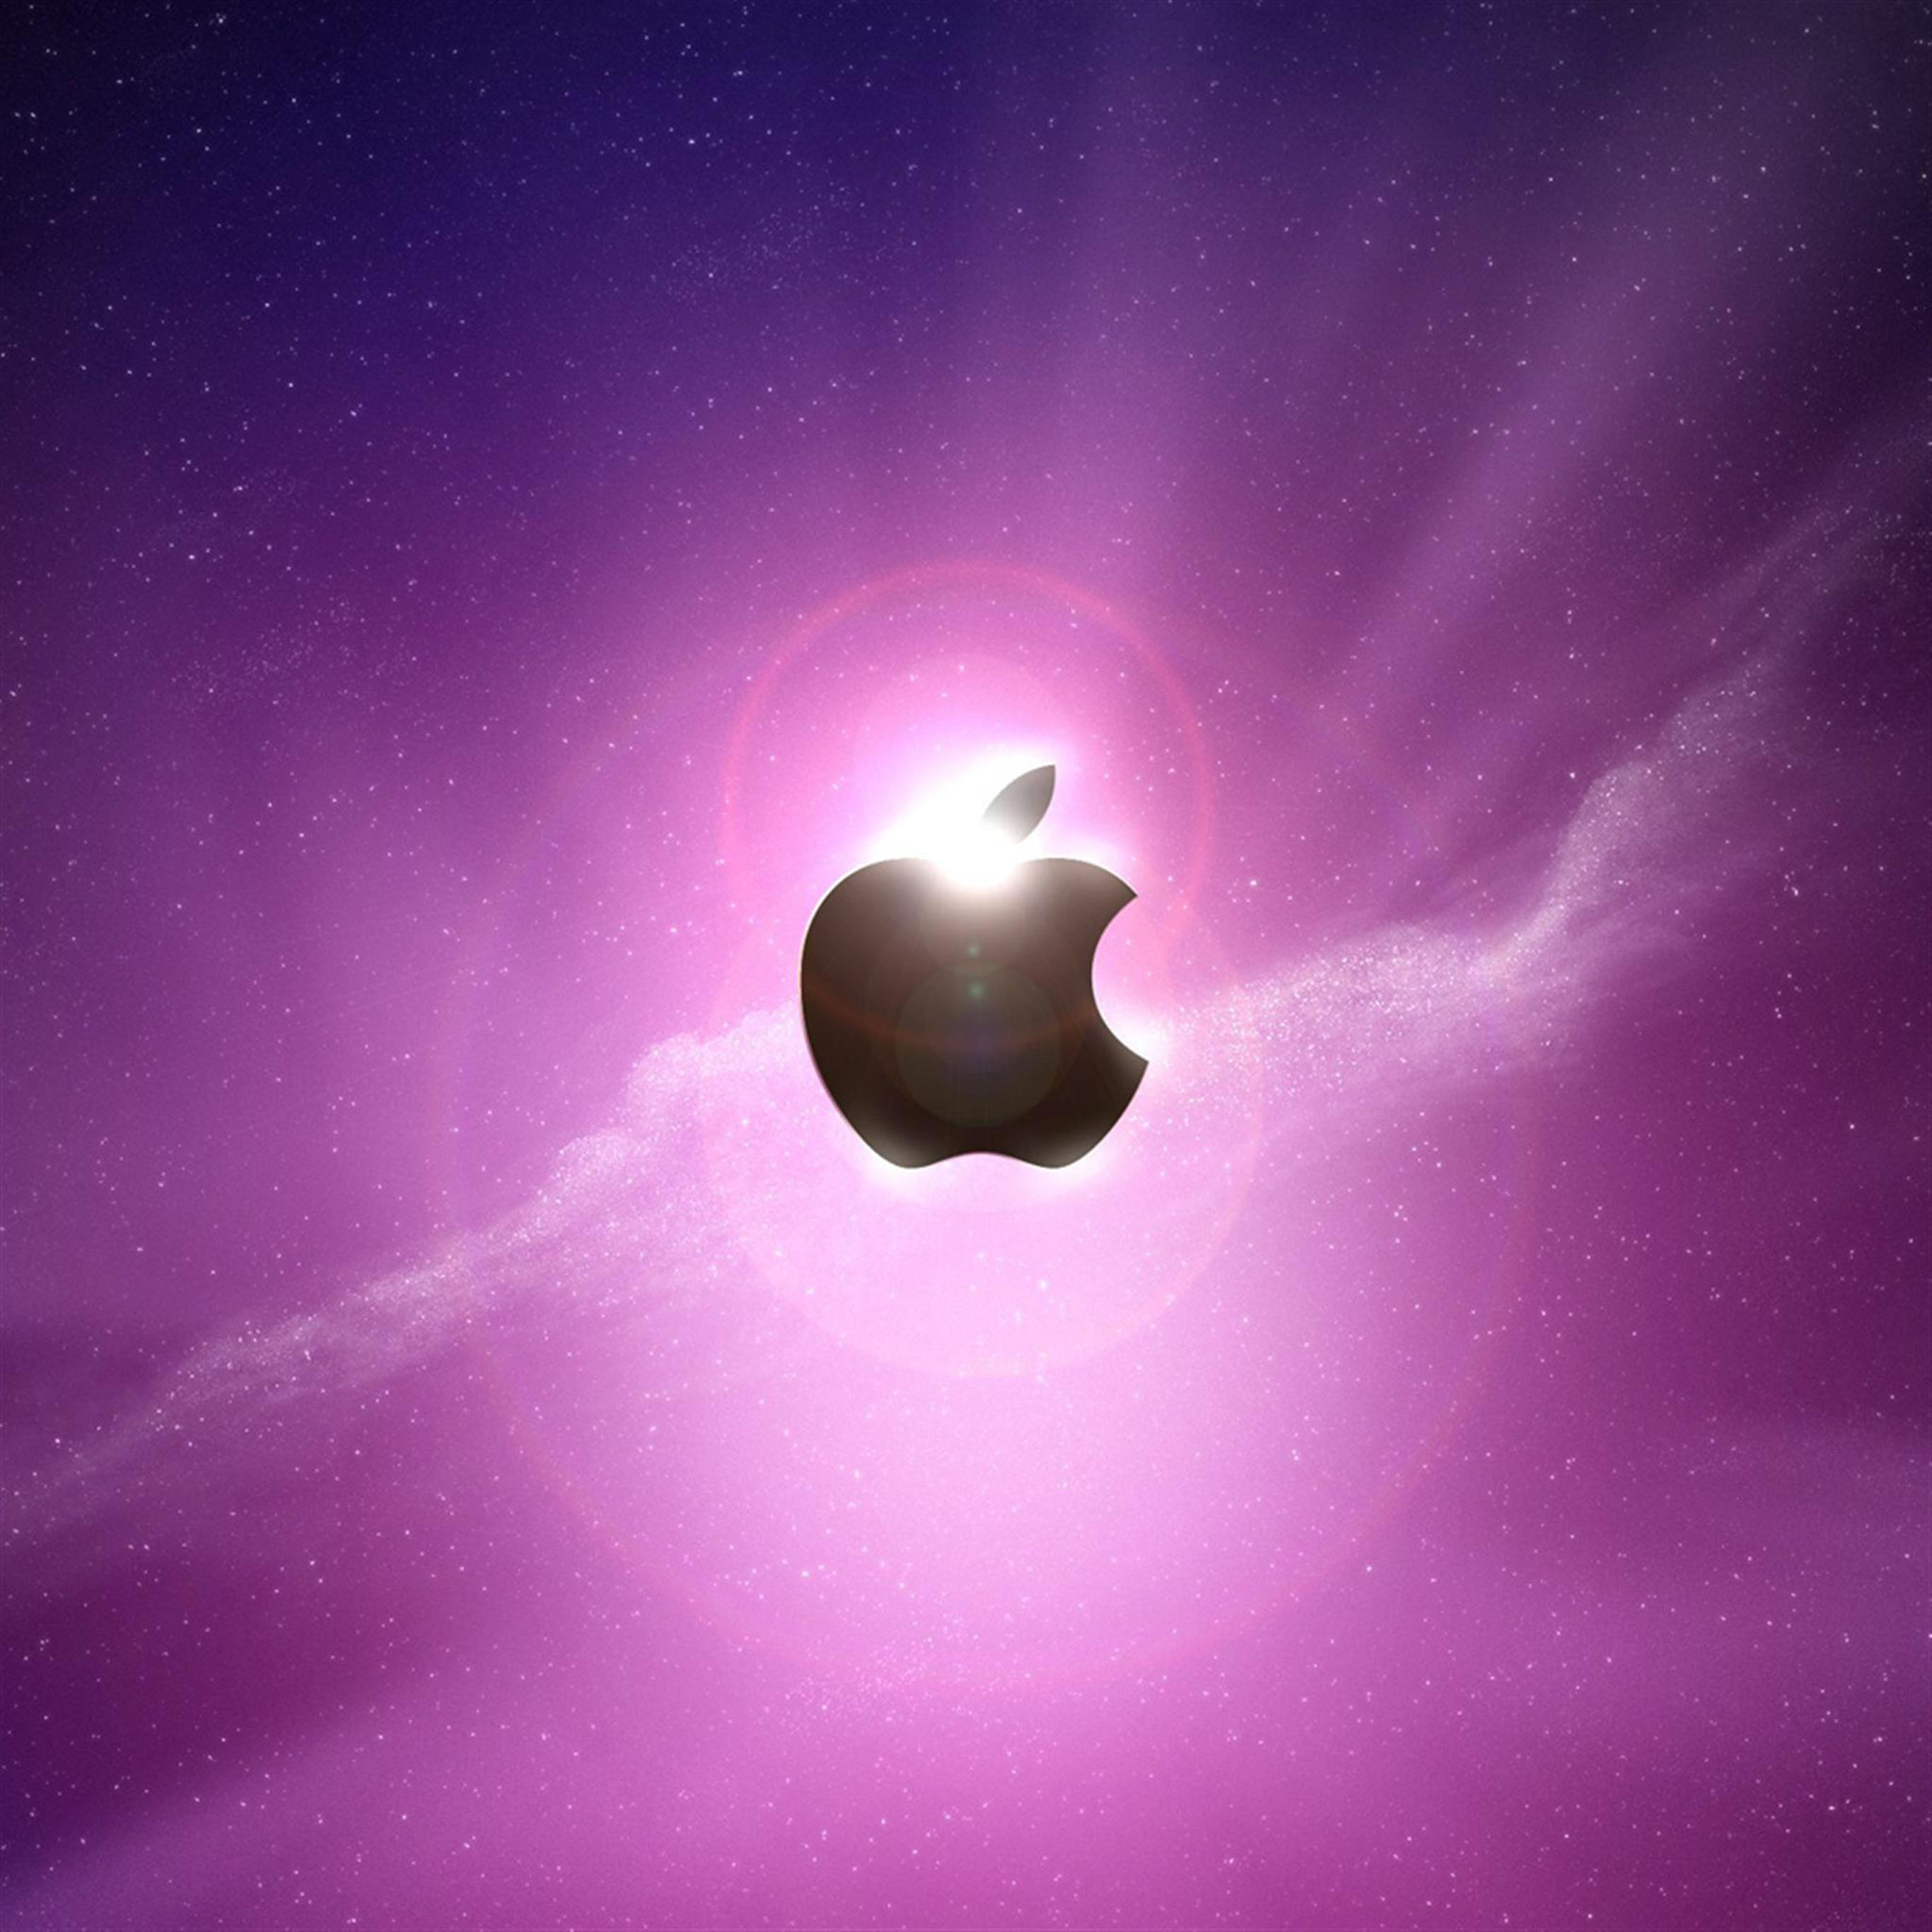 Apple iPad Background